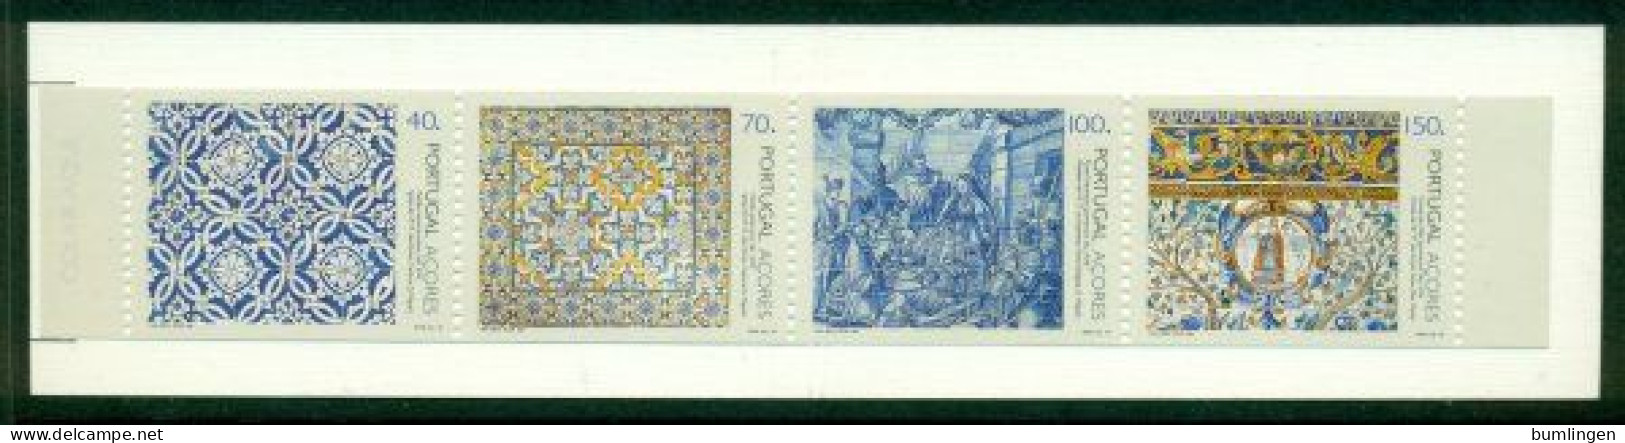 PORTUGAL – AZORES 1994 Mi MH 12 Booklet** Antique Tiles [B406] - Porselein